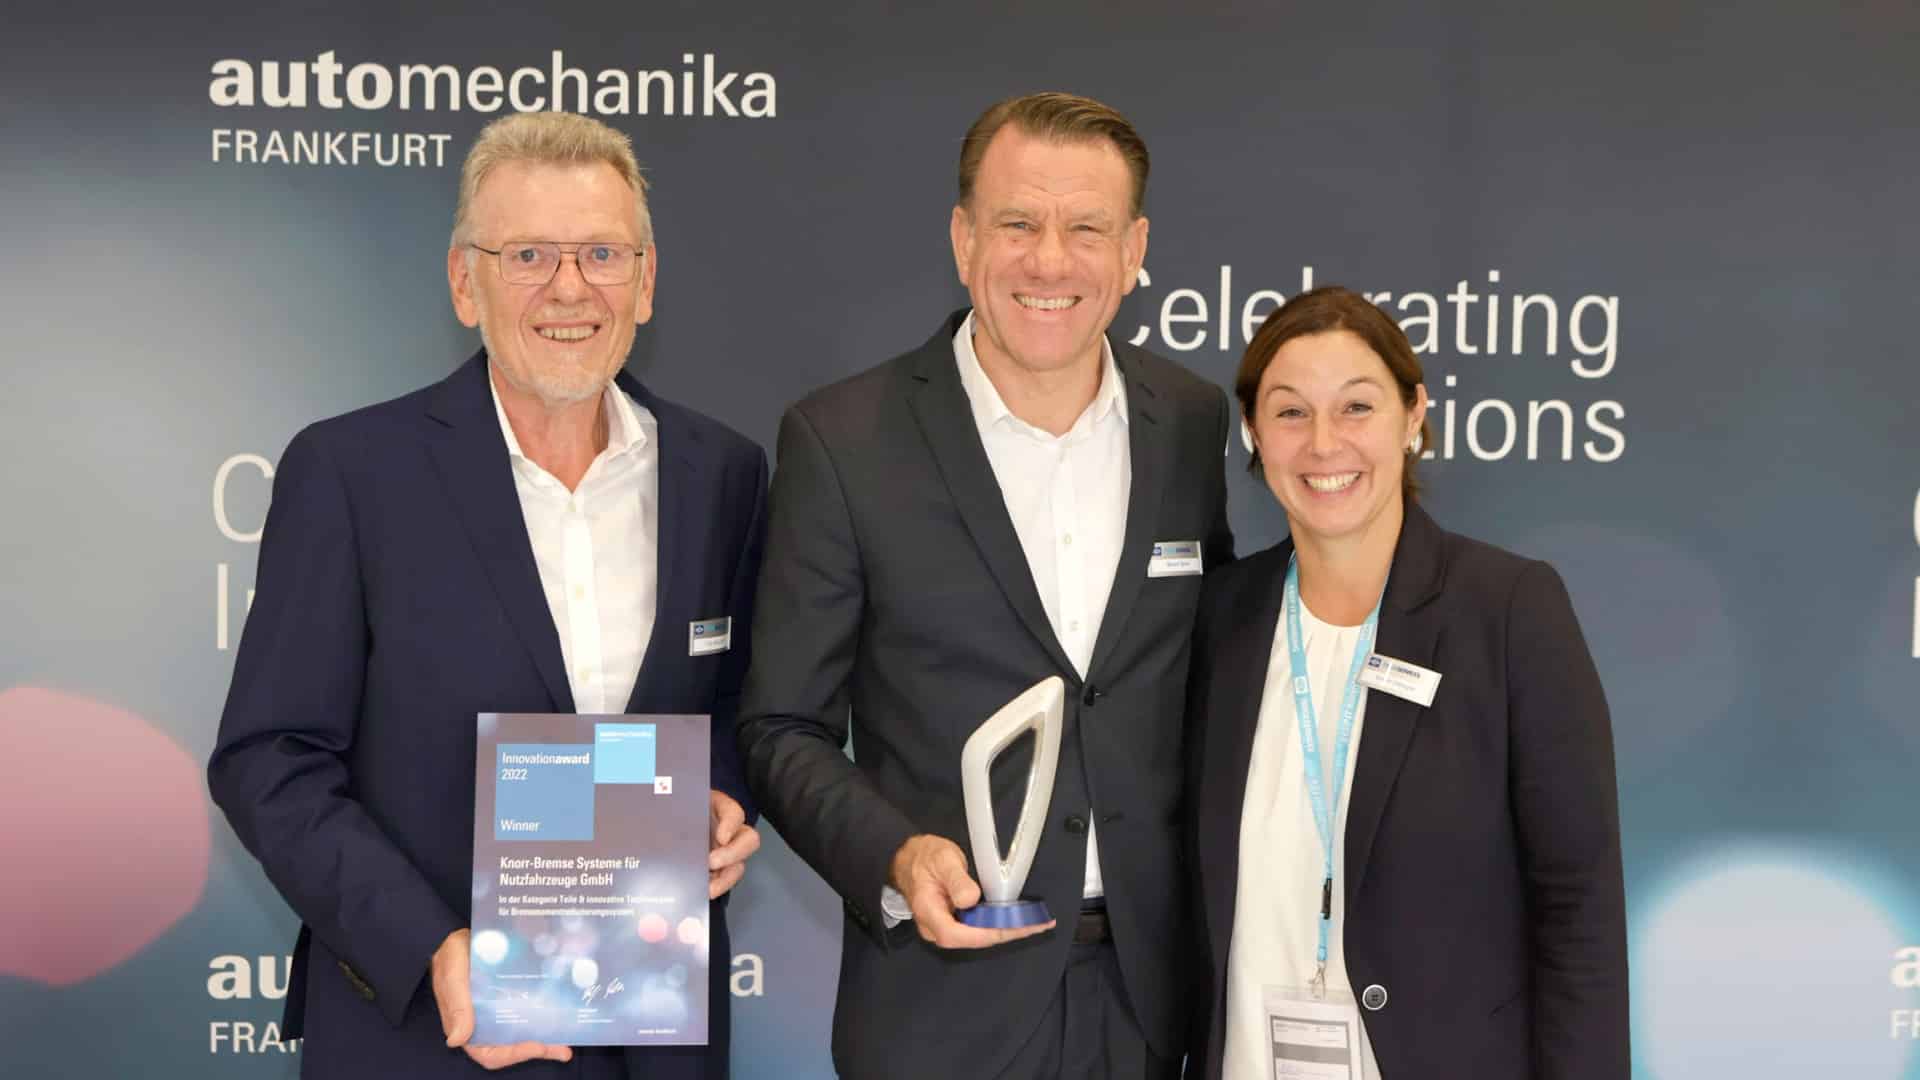 Knorr-Bremse won Automechanika innovation award